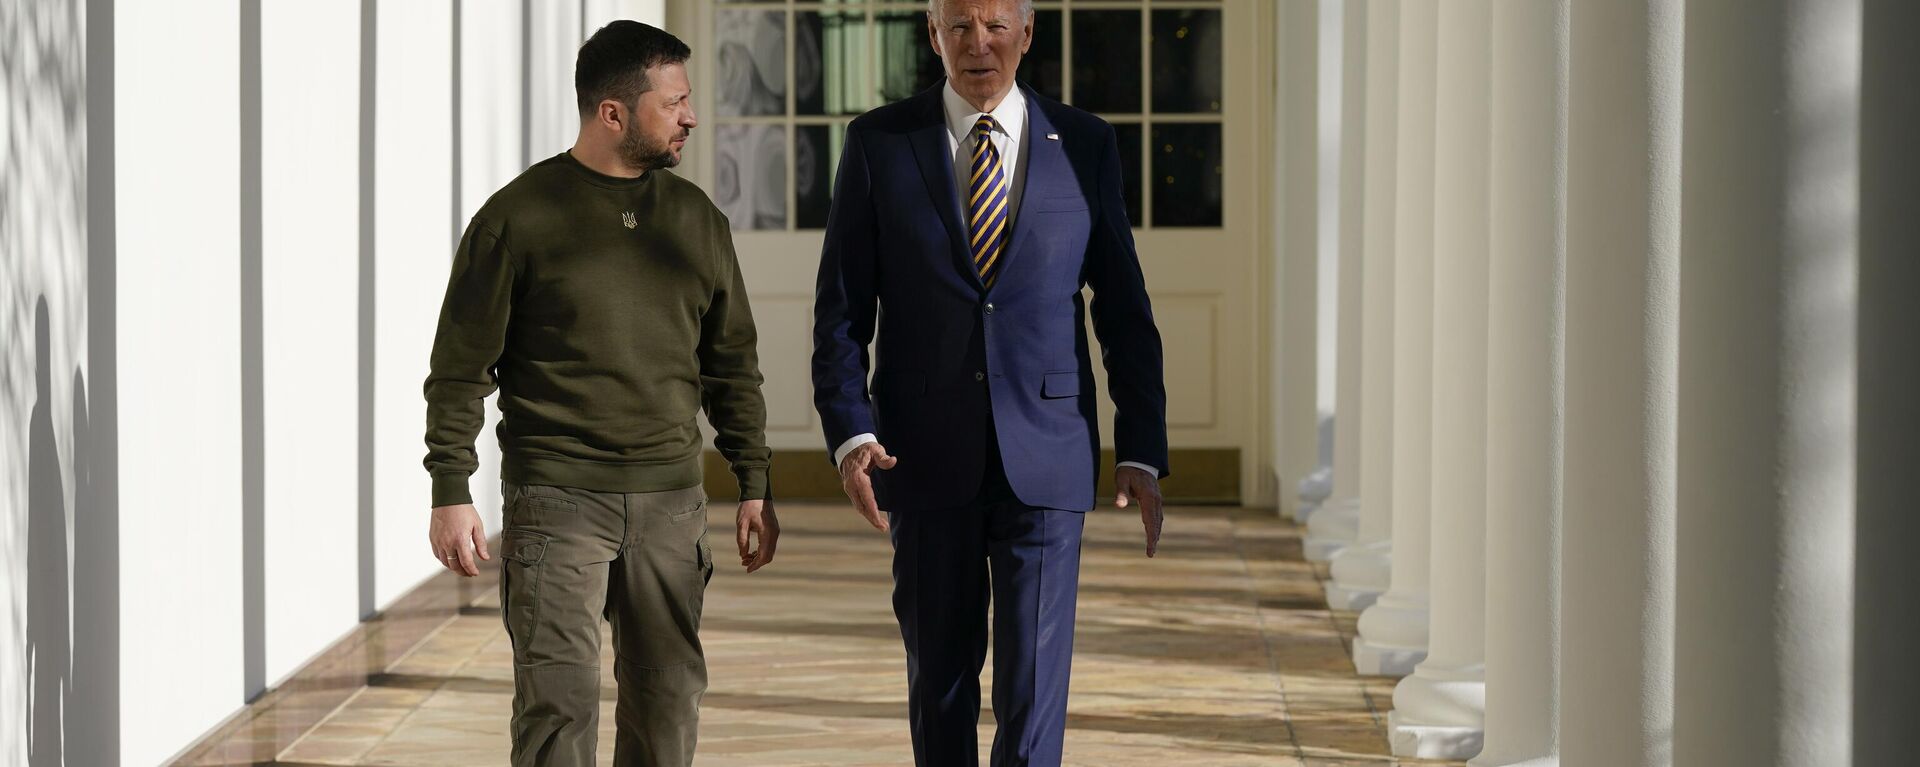 President Joe Biden and Ukrainian President Volodymyr Zelenskyy walk along the Colonnade of the White House, Wednesday, Dec. 21, 2022, in Washington.  - Sputnik International, 1920, 16.02.2023